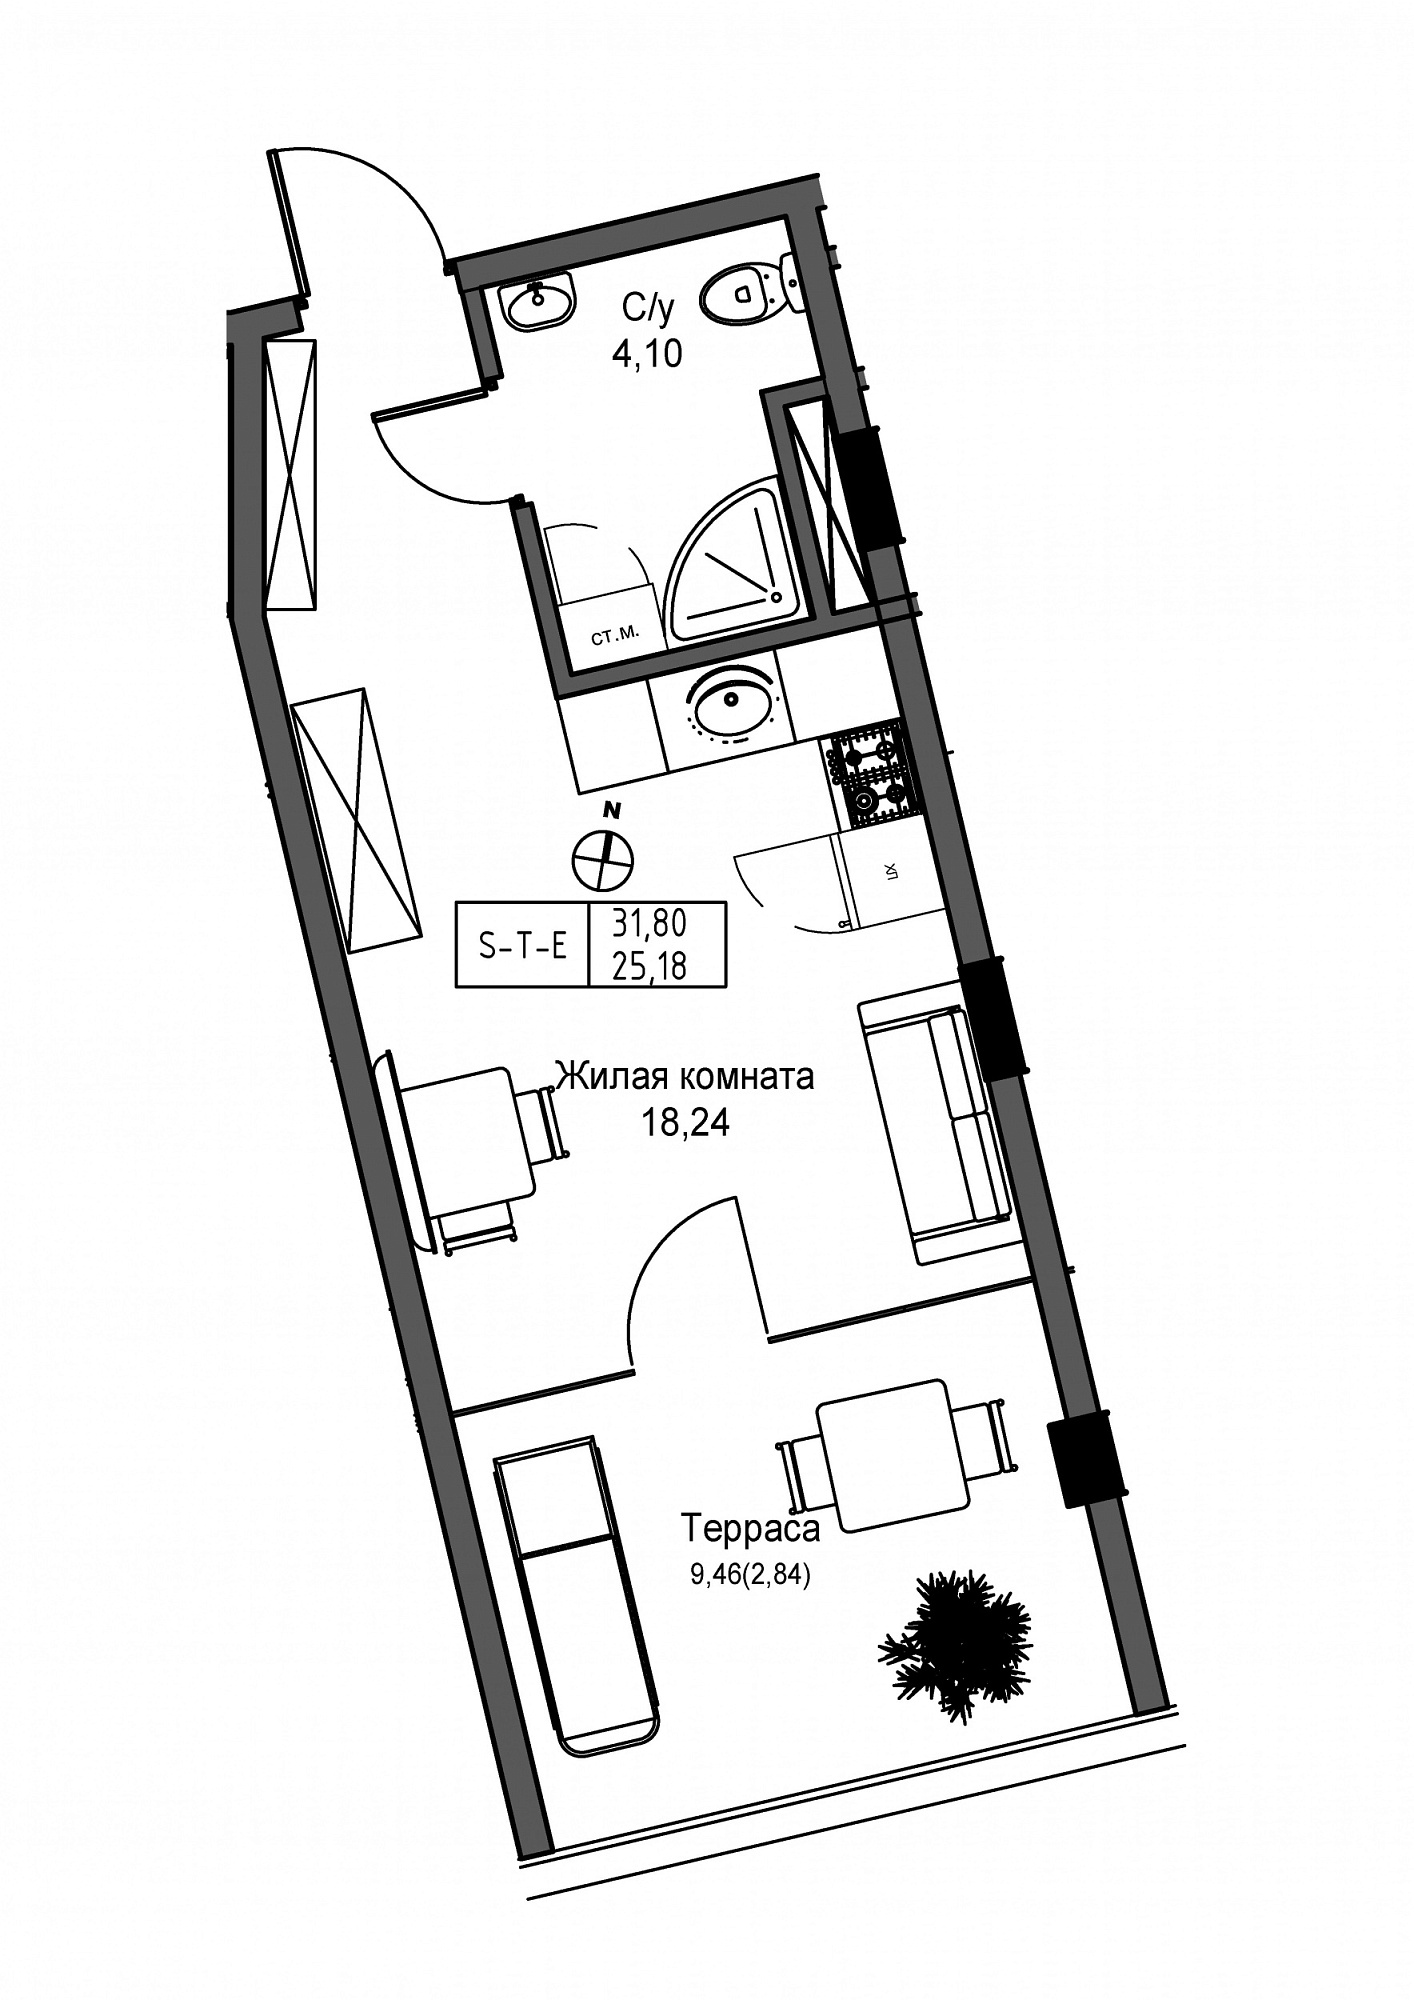 Планування Smart-квартира площею 25.18м2, UM-004-03/0014.